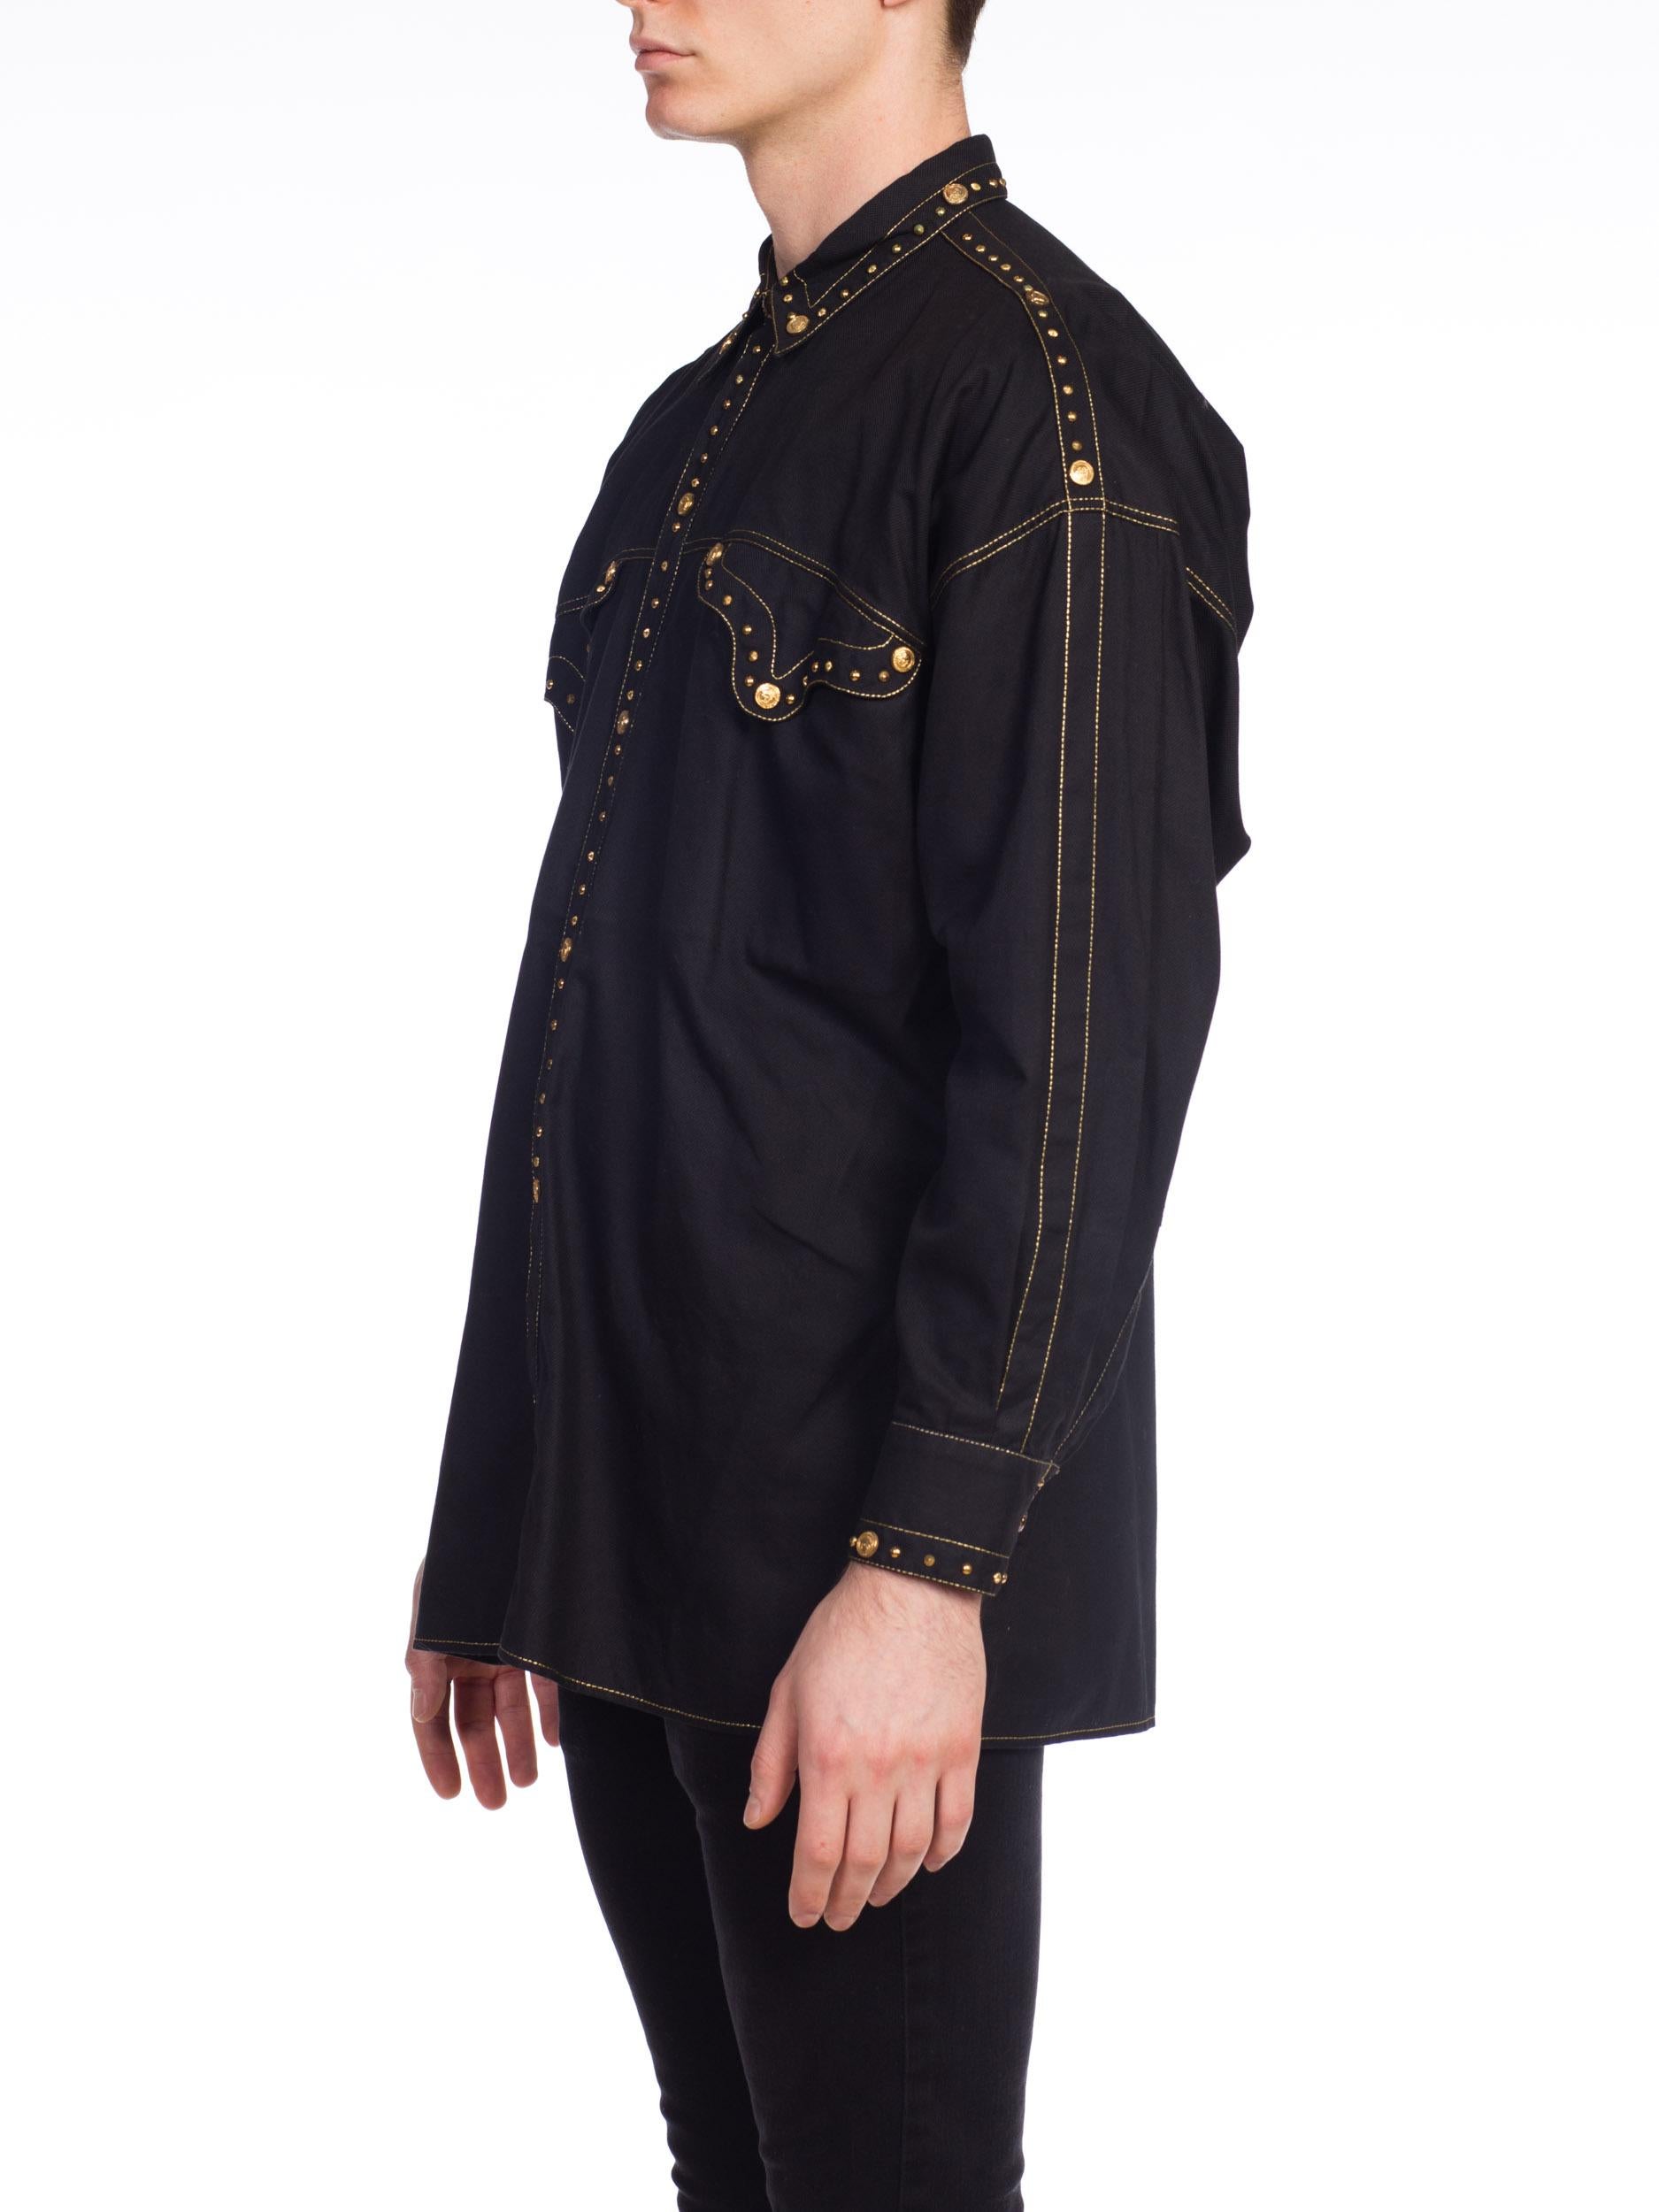 Black 1990S GIANNI VERSACE Men's Shirt With Gold Medusa Studs & Metallic Embroidery